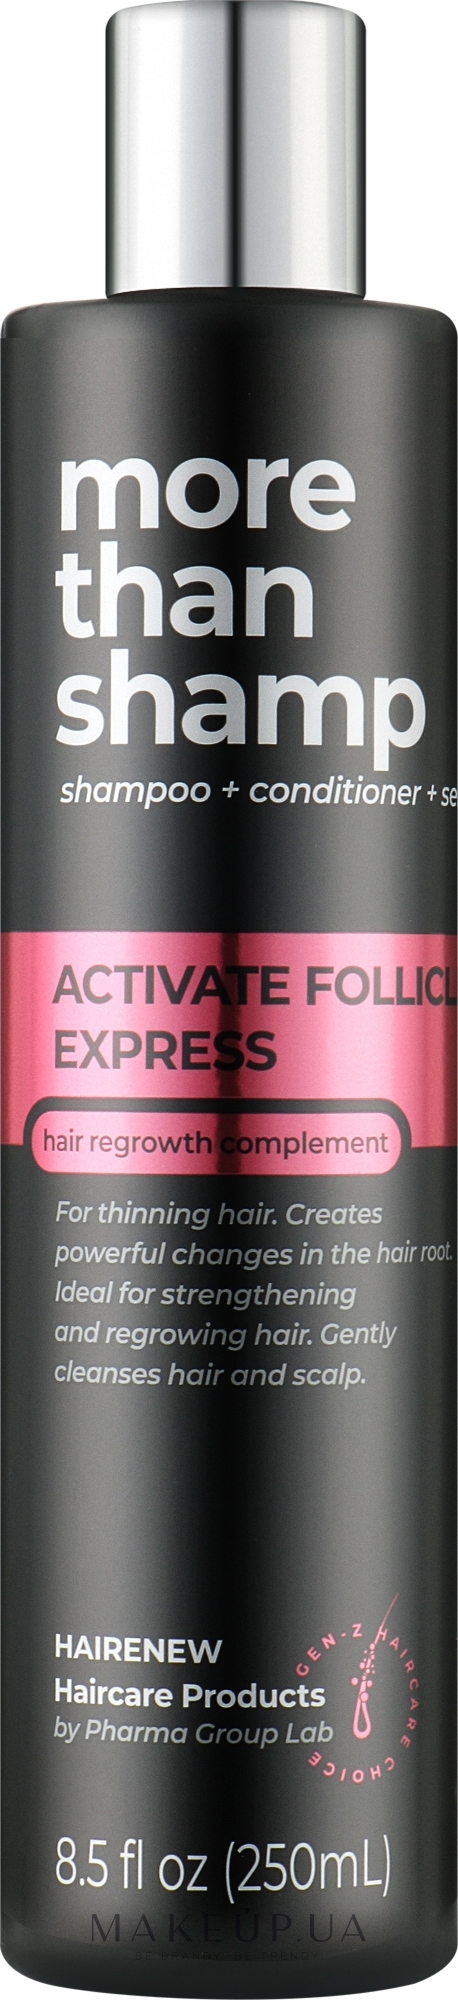 Шампунь для волосся "Експрес-активація фолікулів" - Hairenew Activate Follicles Expre Shampoo — фото 250ml